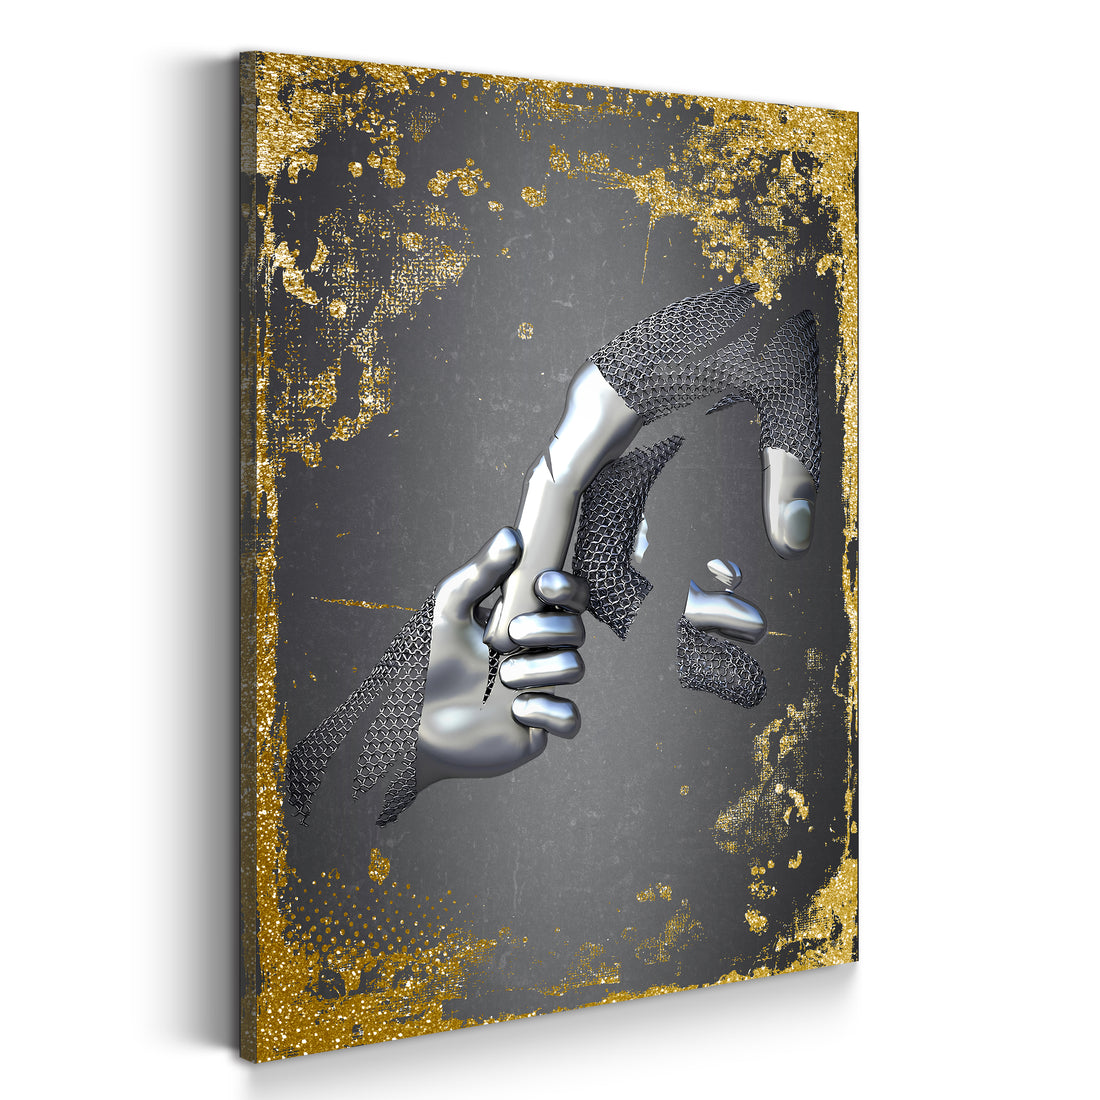 Wandbild Abstract 3D Metallfigur Hände metallic Wandkunst Körper